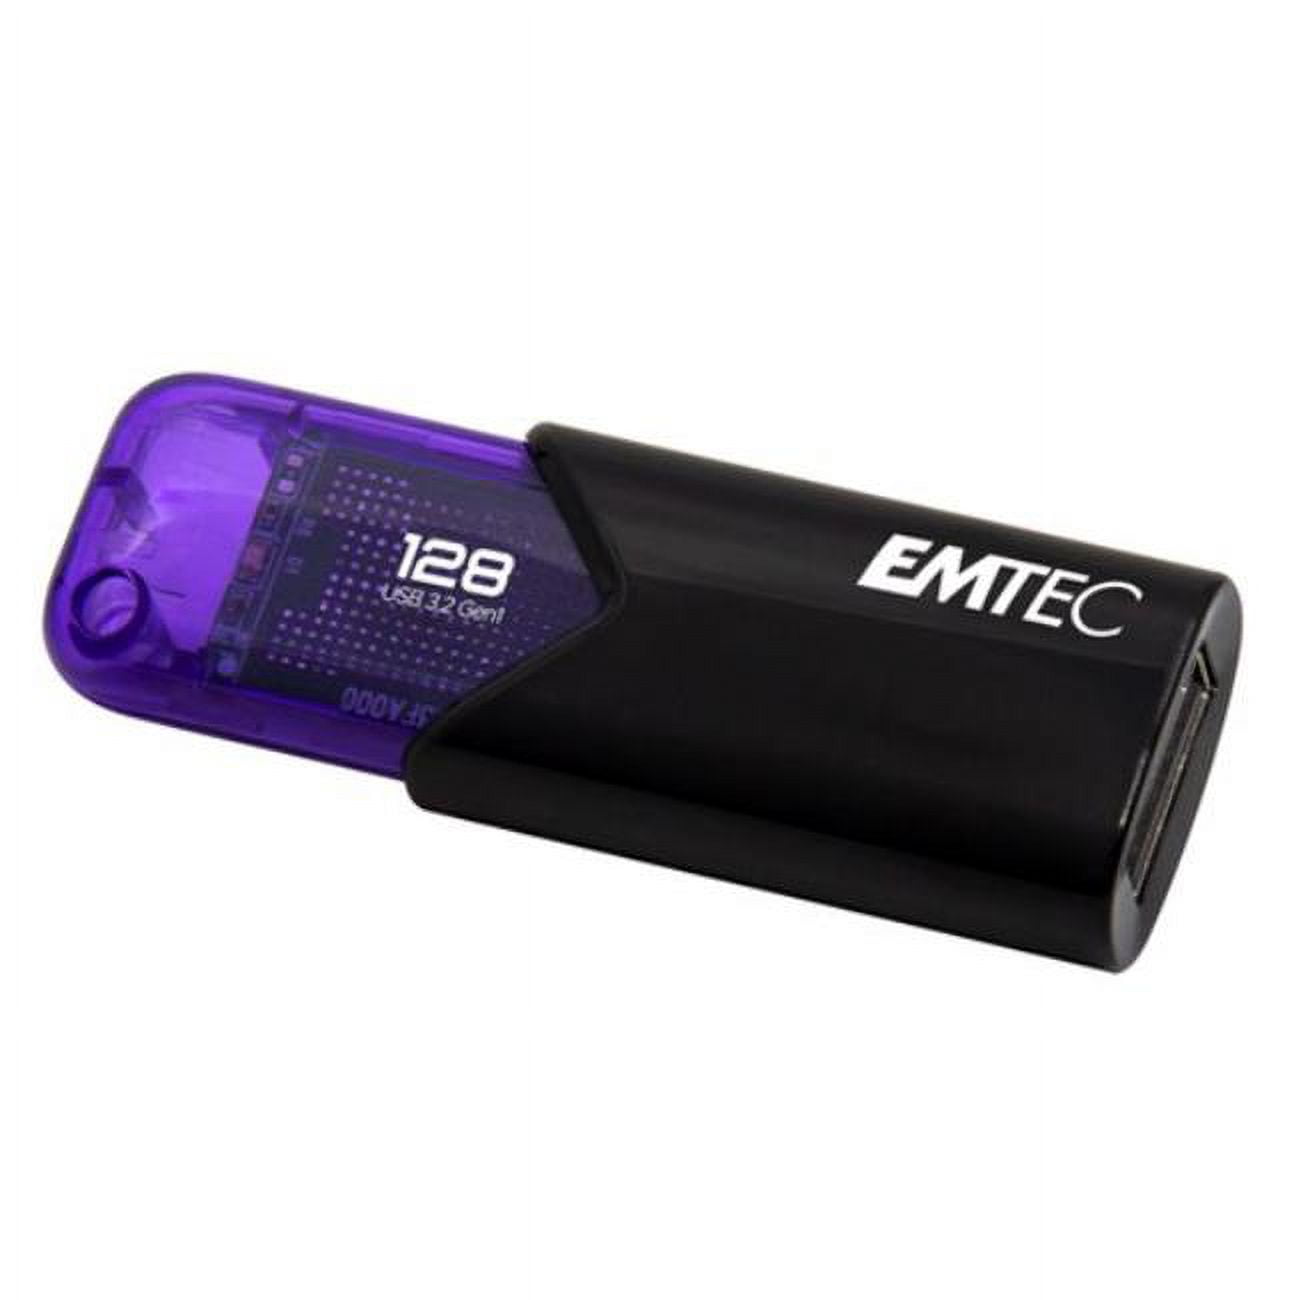 Picture of EMTEC ECMMD128GC410JAR80 USB 2.0 Cand-Jar 128 GB 80-PCE Flash Drive